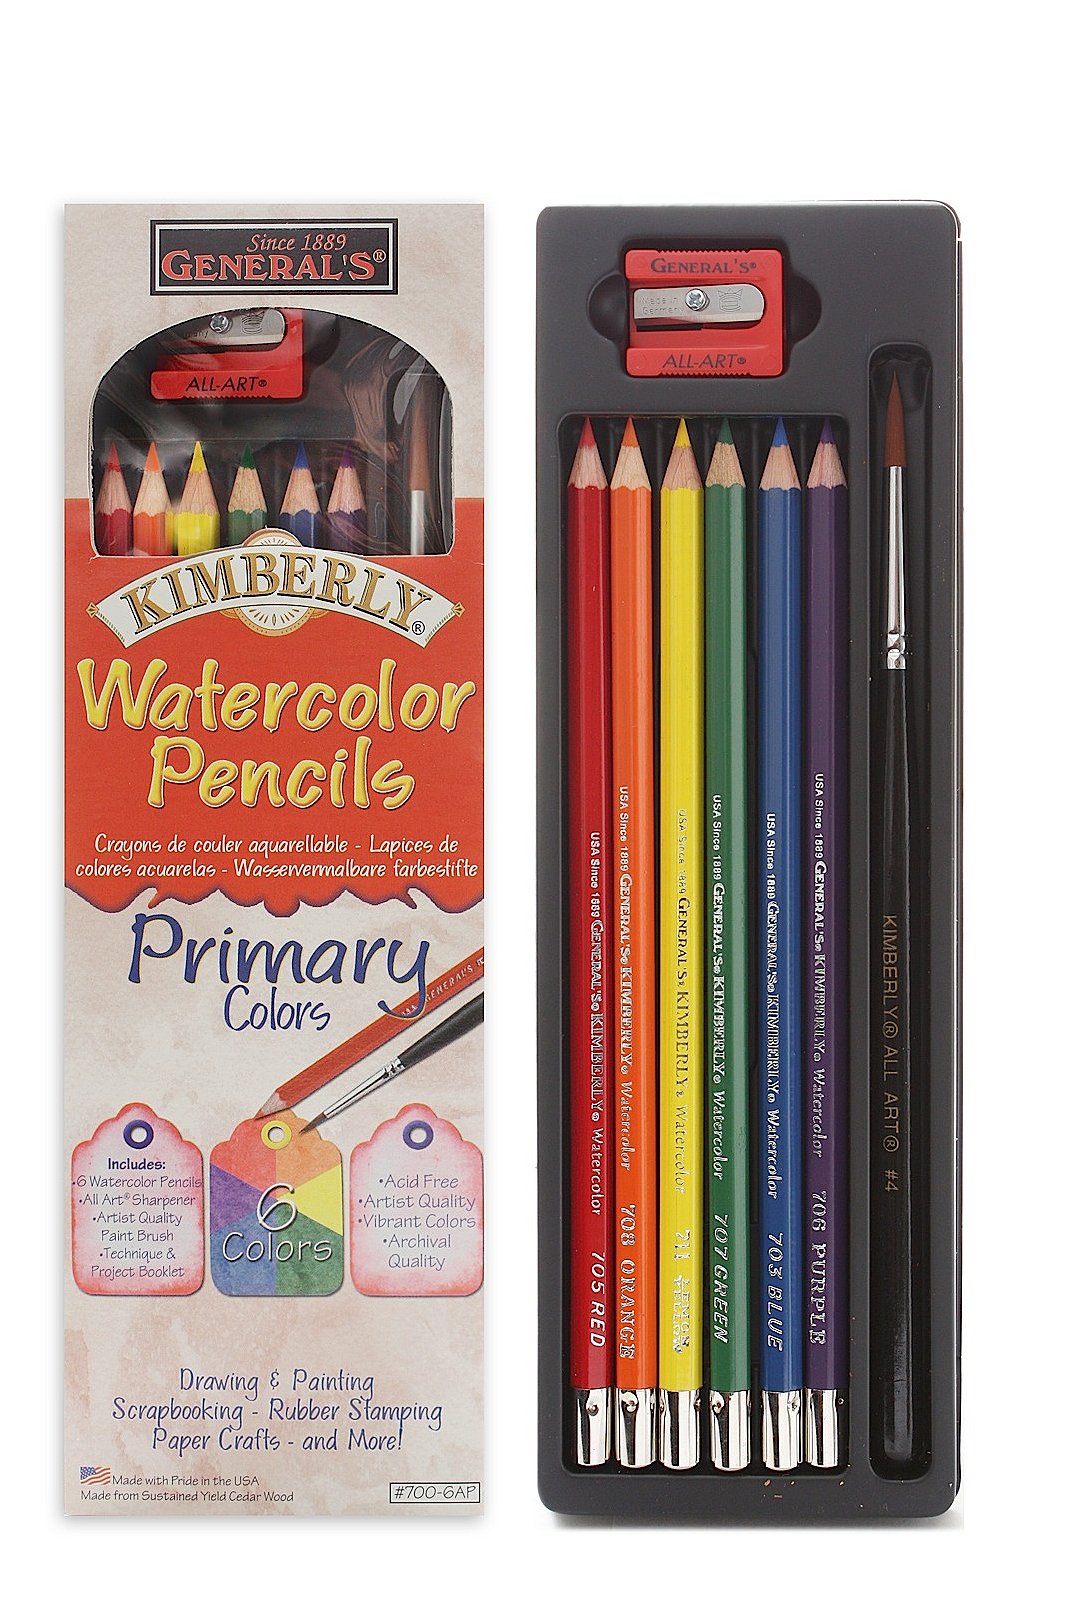 General's Kimberly Drawing Pencil - Drawing Kit, Set of 4 Pencils